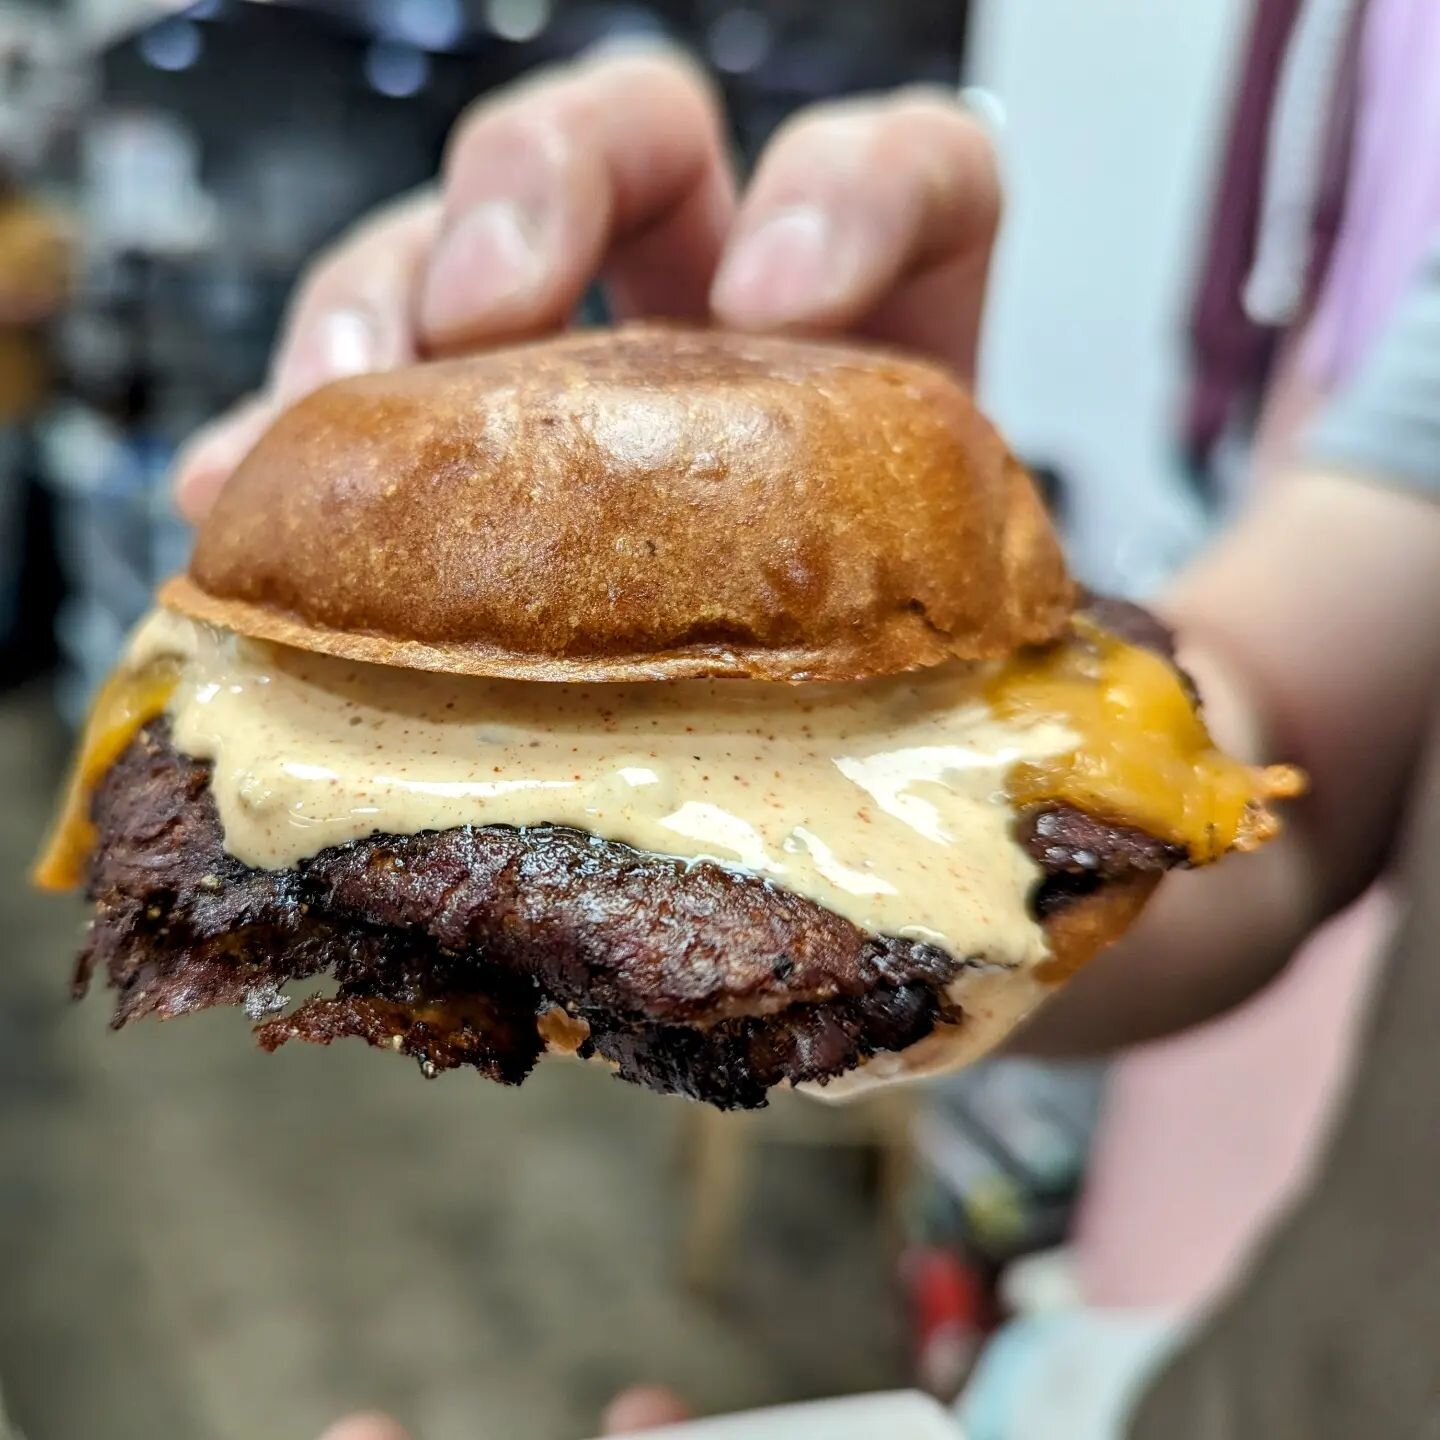 Making burger-chan sliders for @sidbeerbike this weekend.
.
.
.
.
.
.
.
.
#burgerchan #cheeseburgersliders #burgerslider #smashburger #houstonburgers @riceuniversity @ricealumni @ricealumnihouston